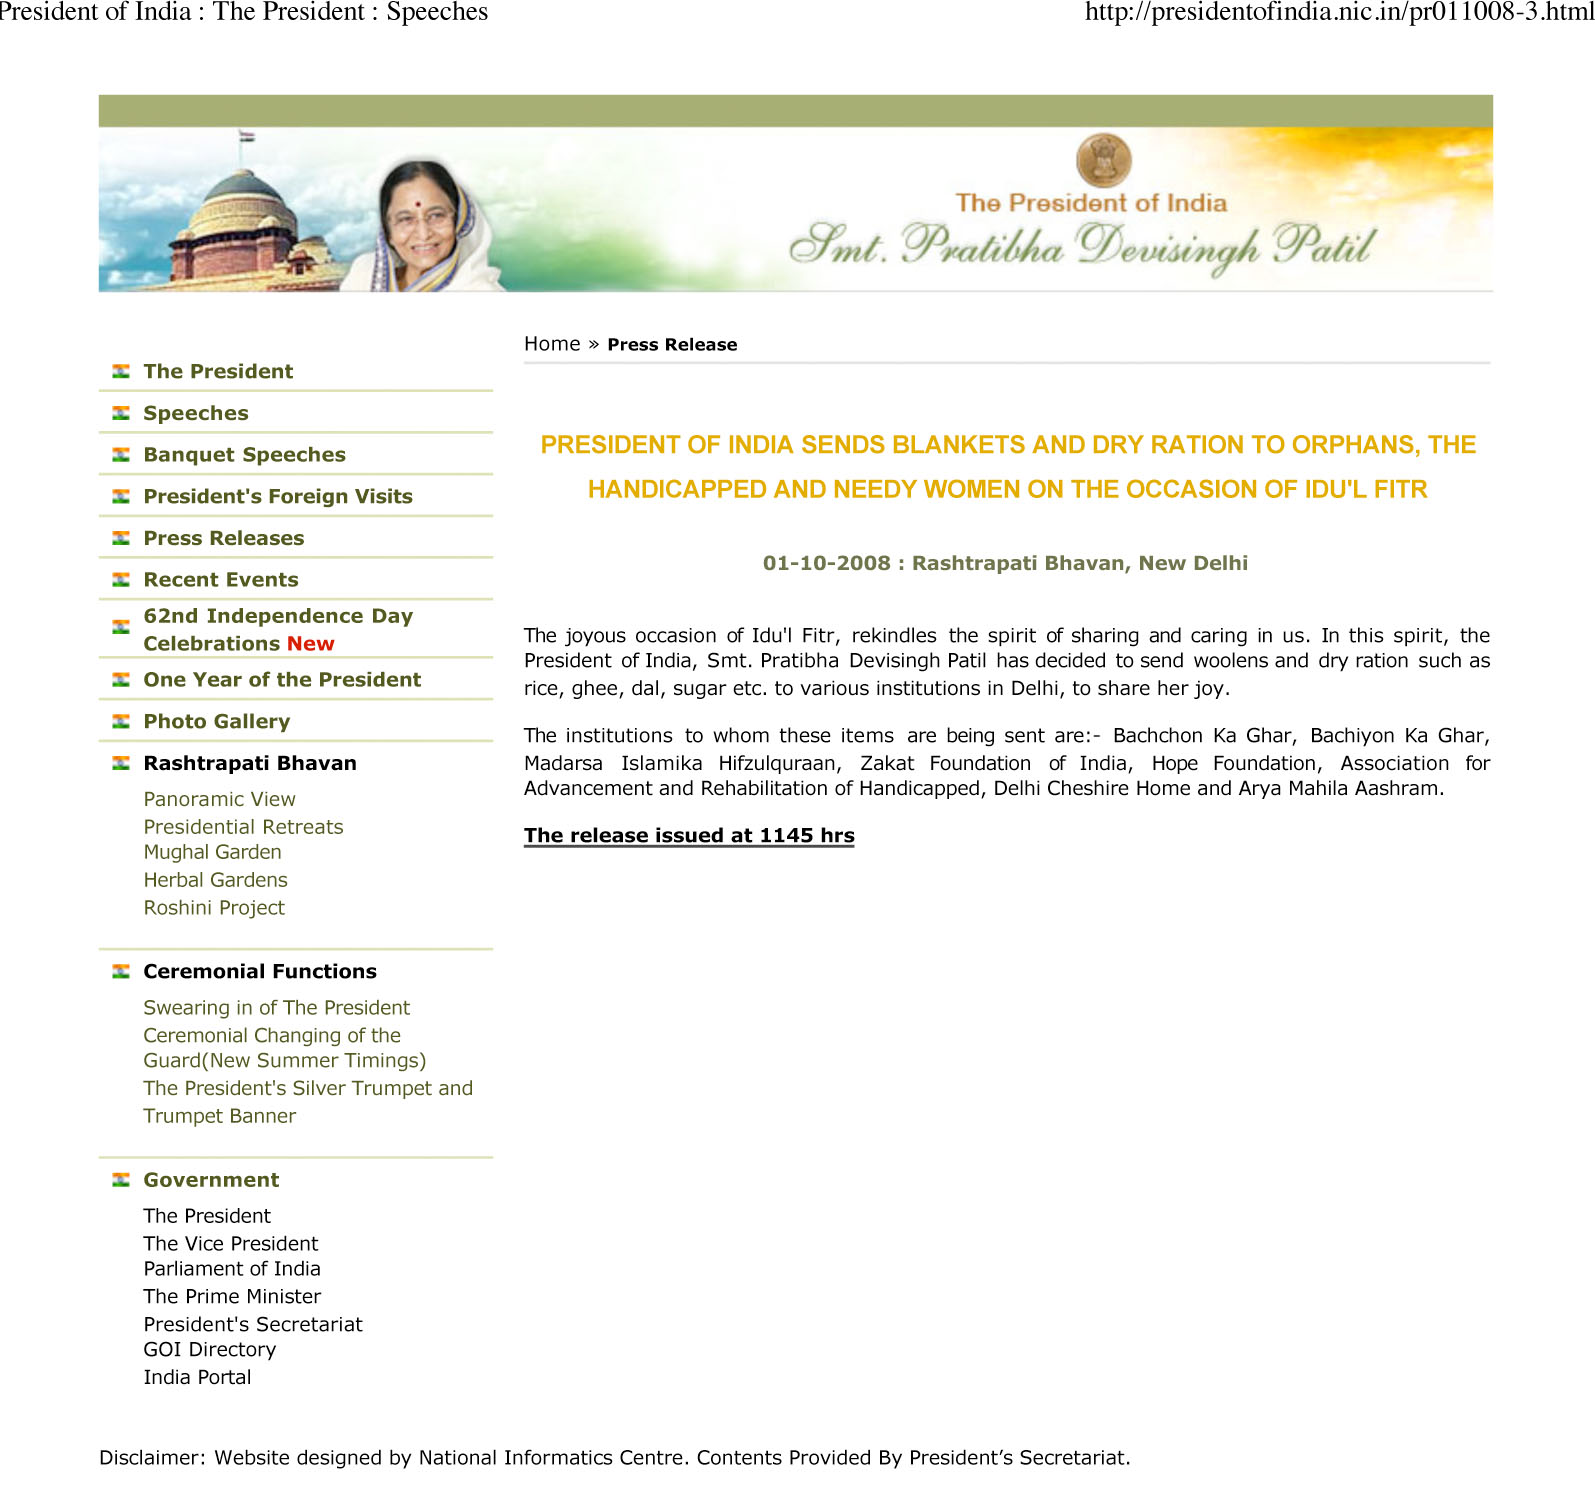 IndiaPresidentWebsite